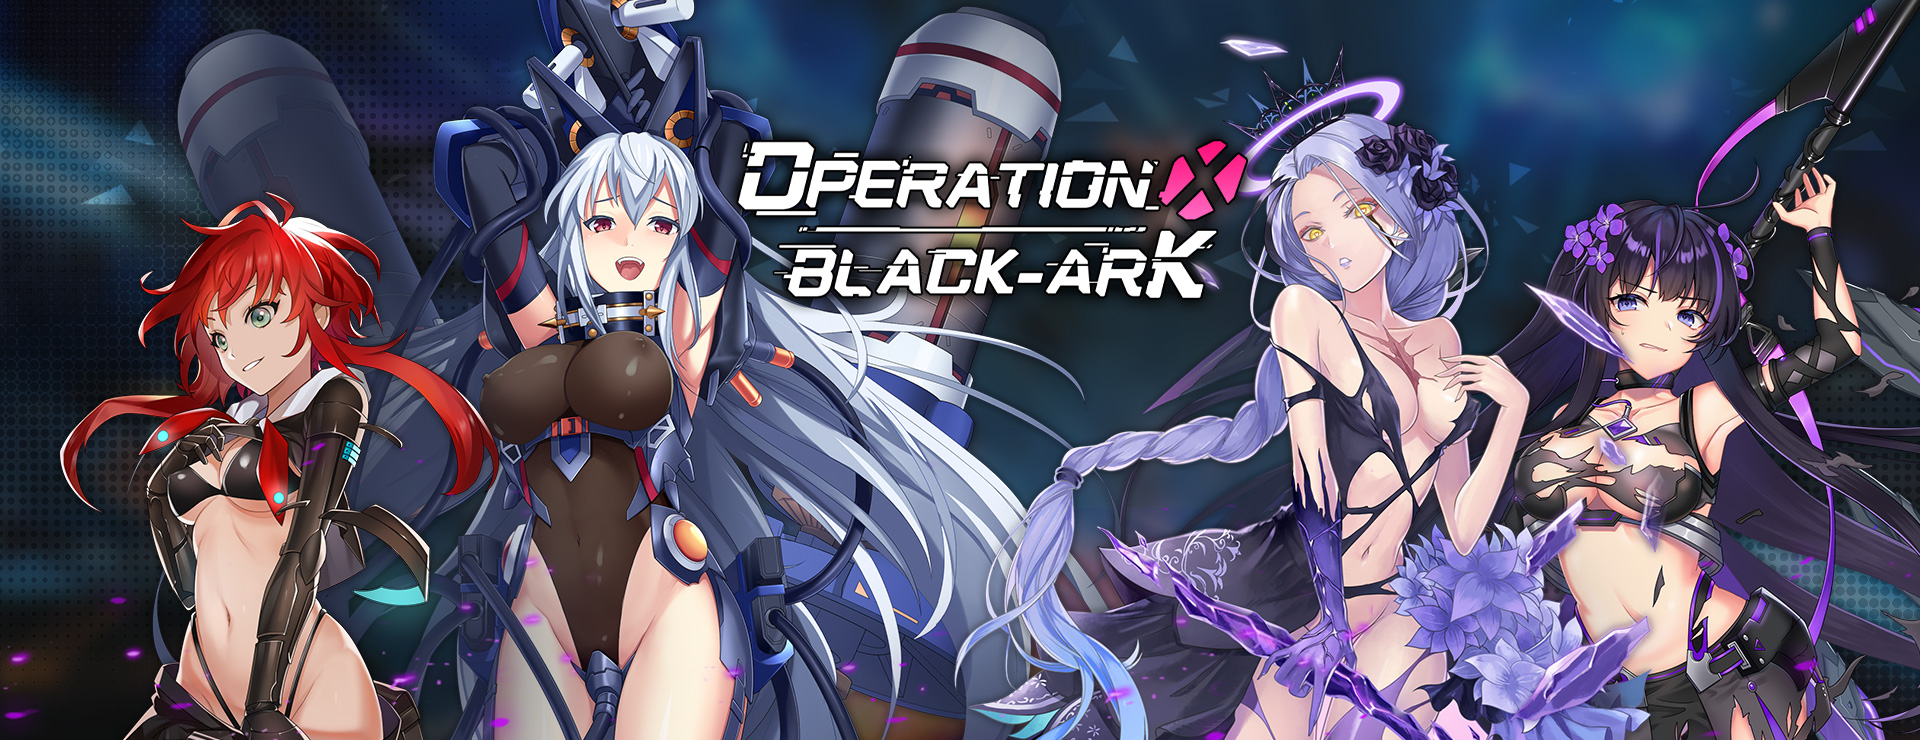 Operation Black-Ark X - SLG ゲーム